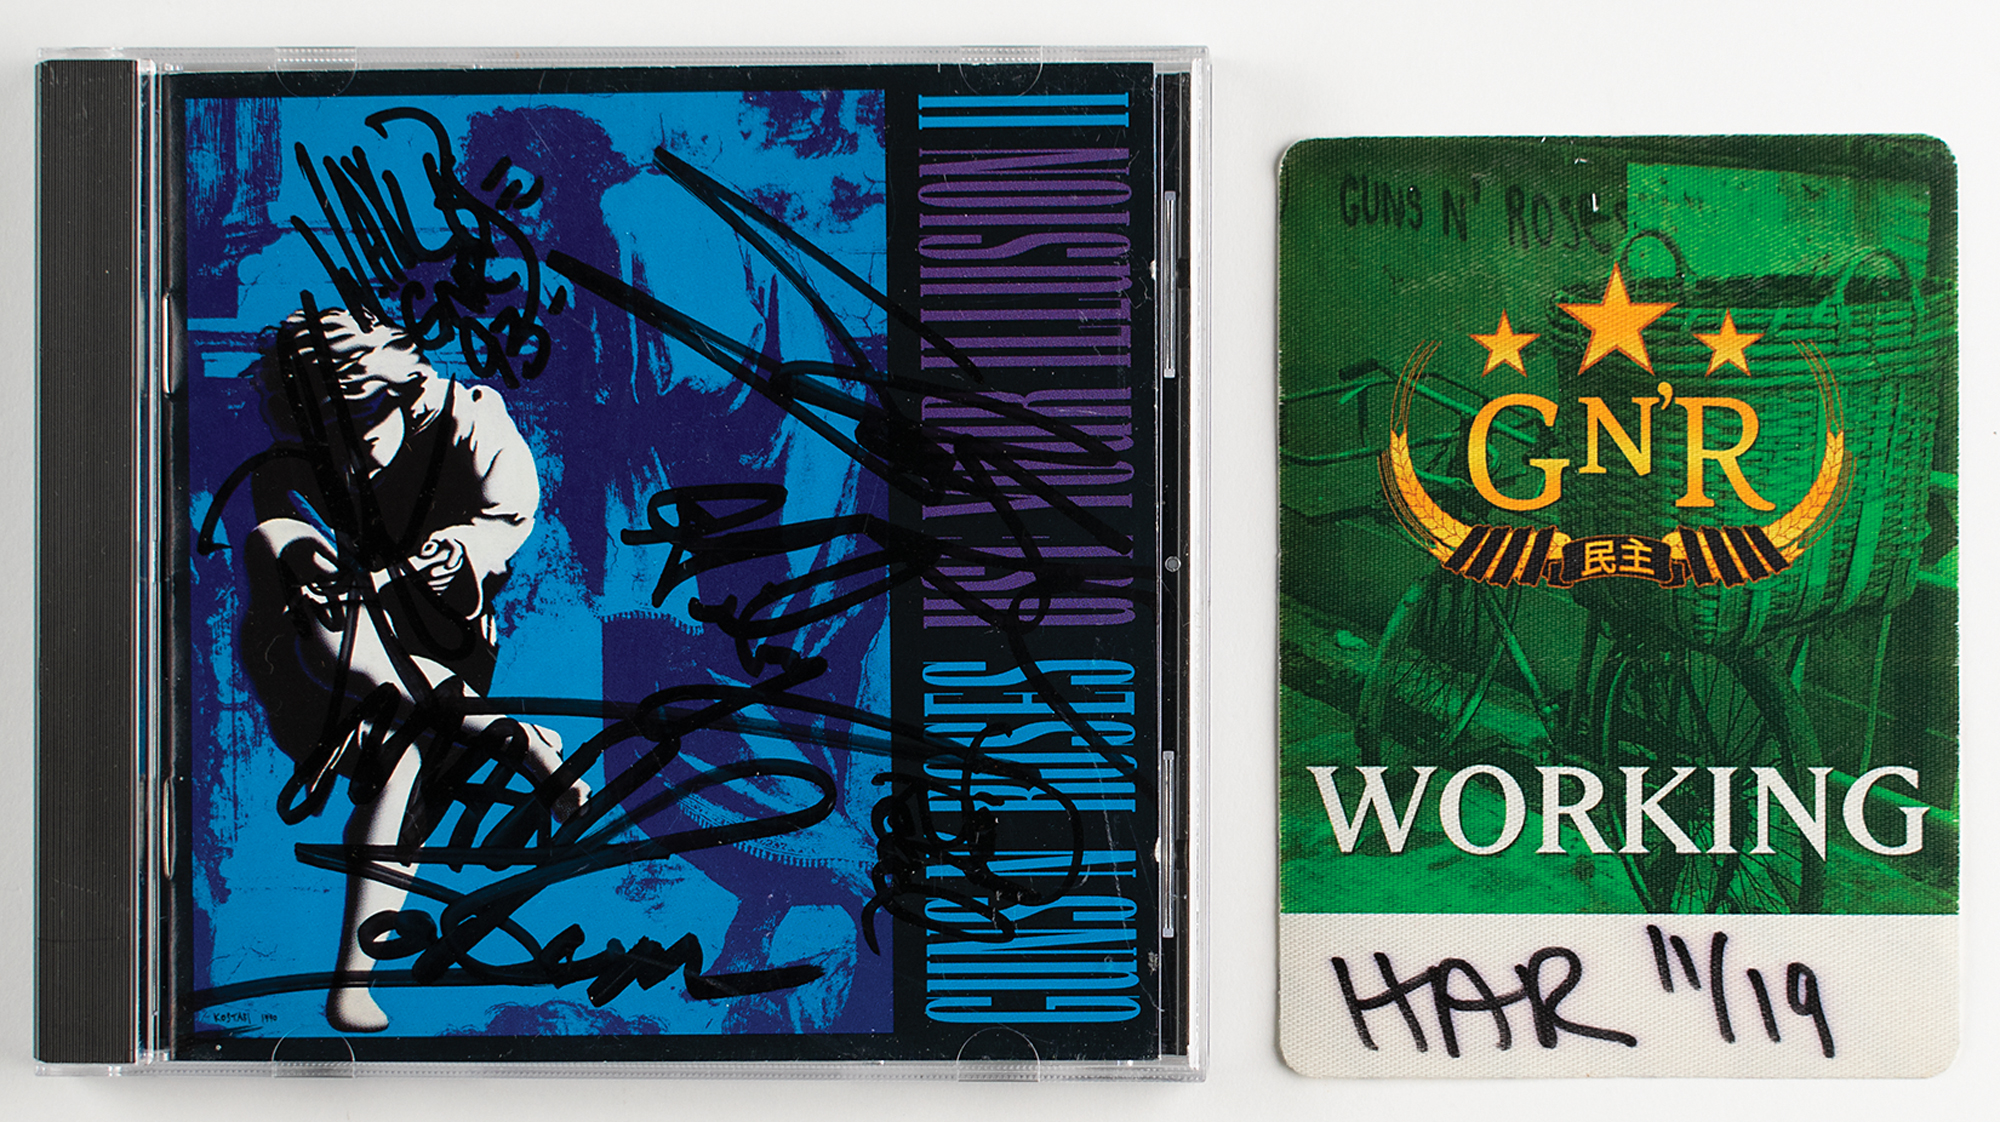 Lot #894 Guns N' Roses Signed CD